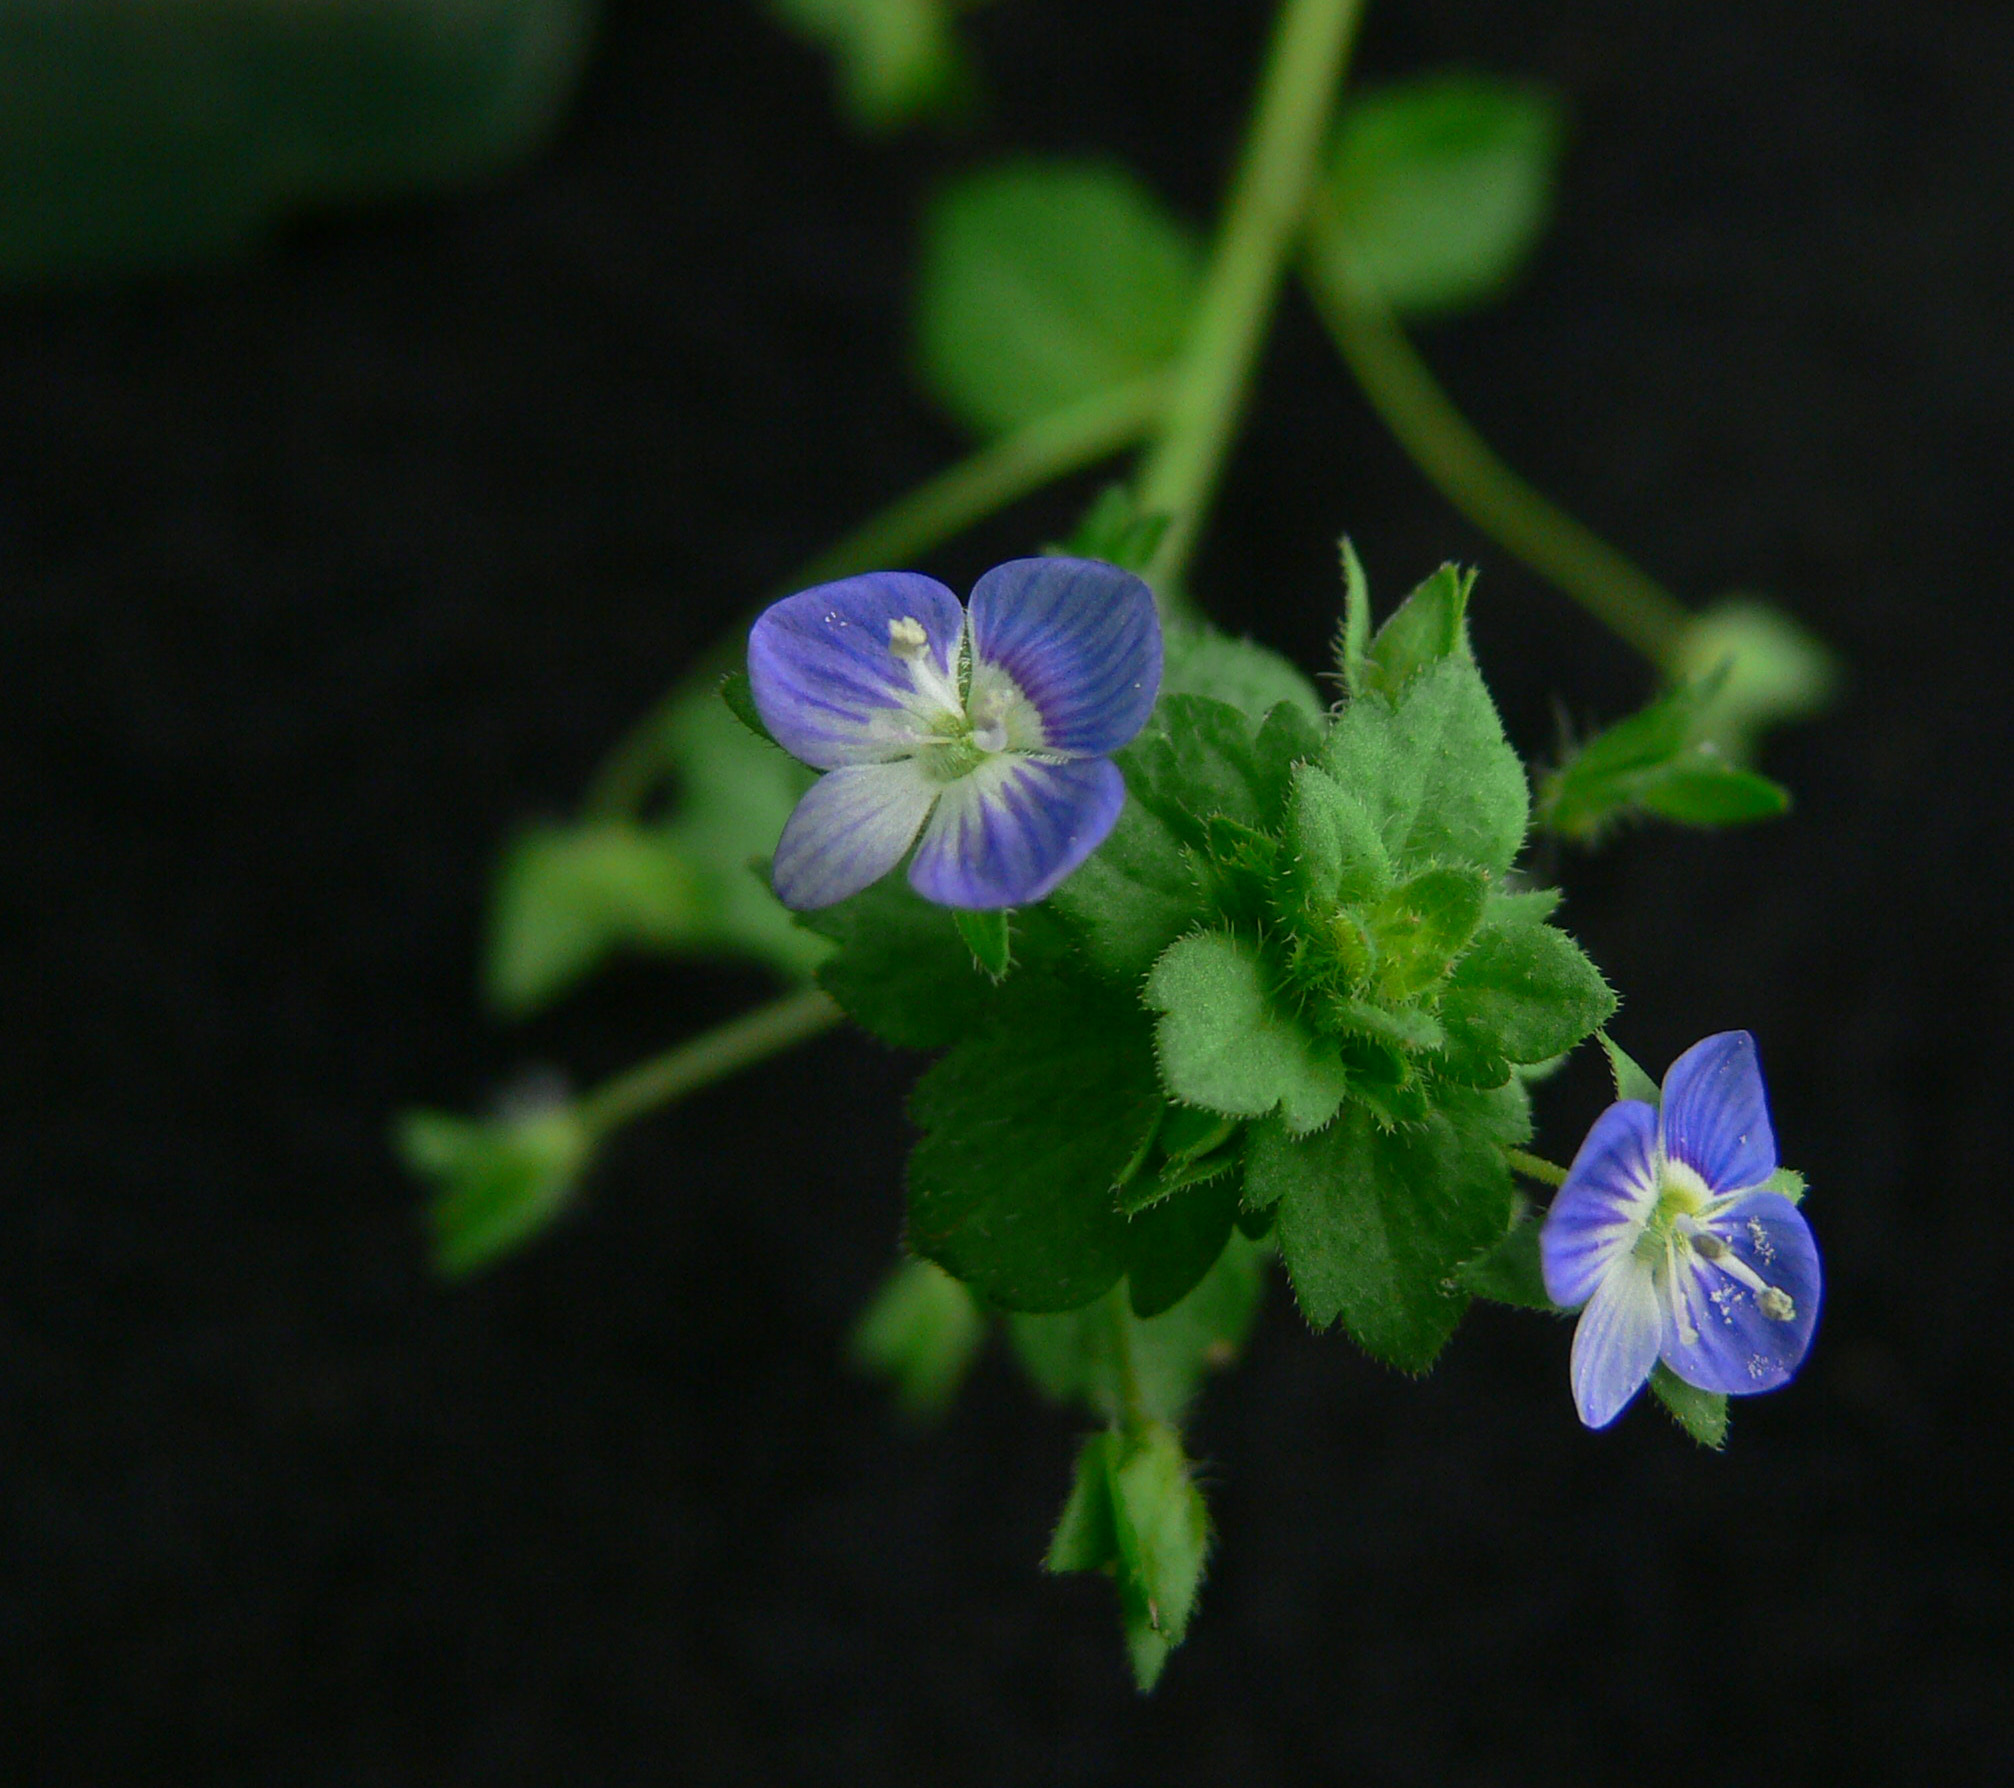 A close-up of the 4 petal, blue